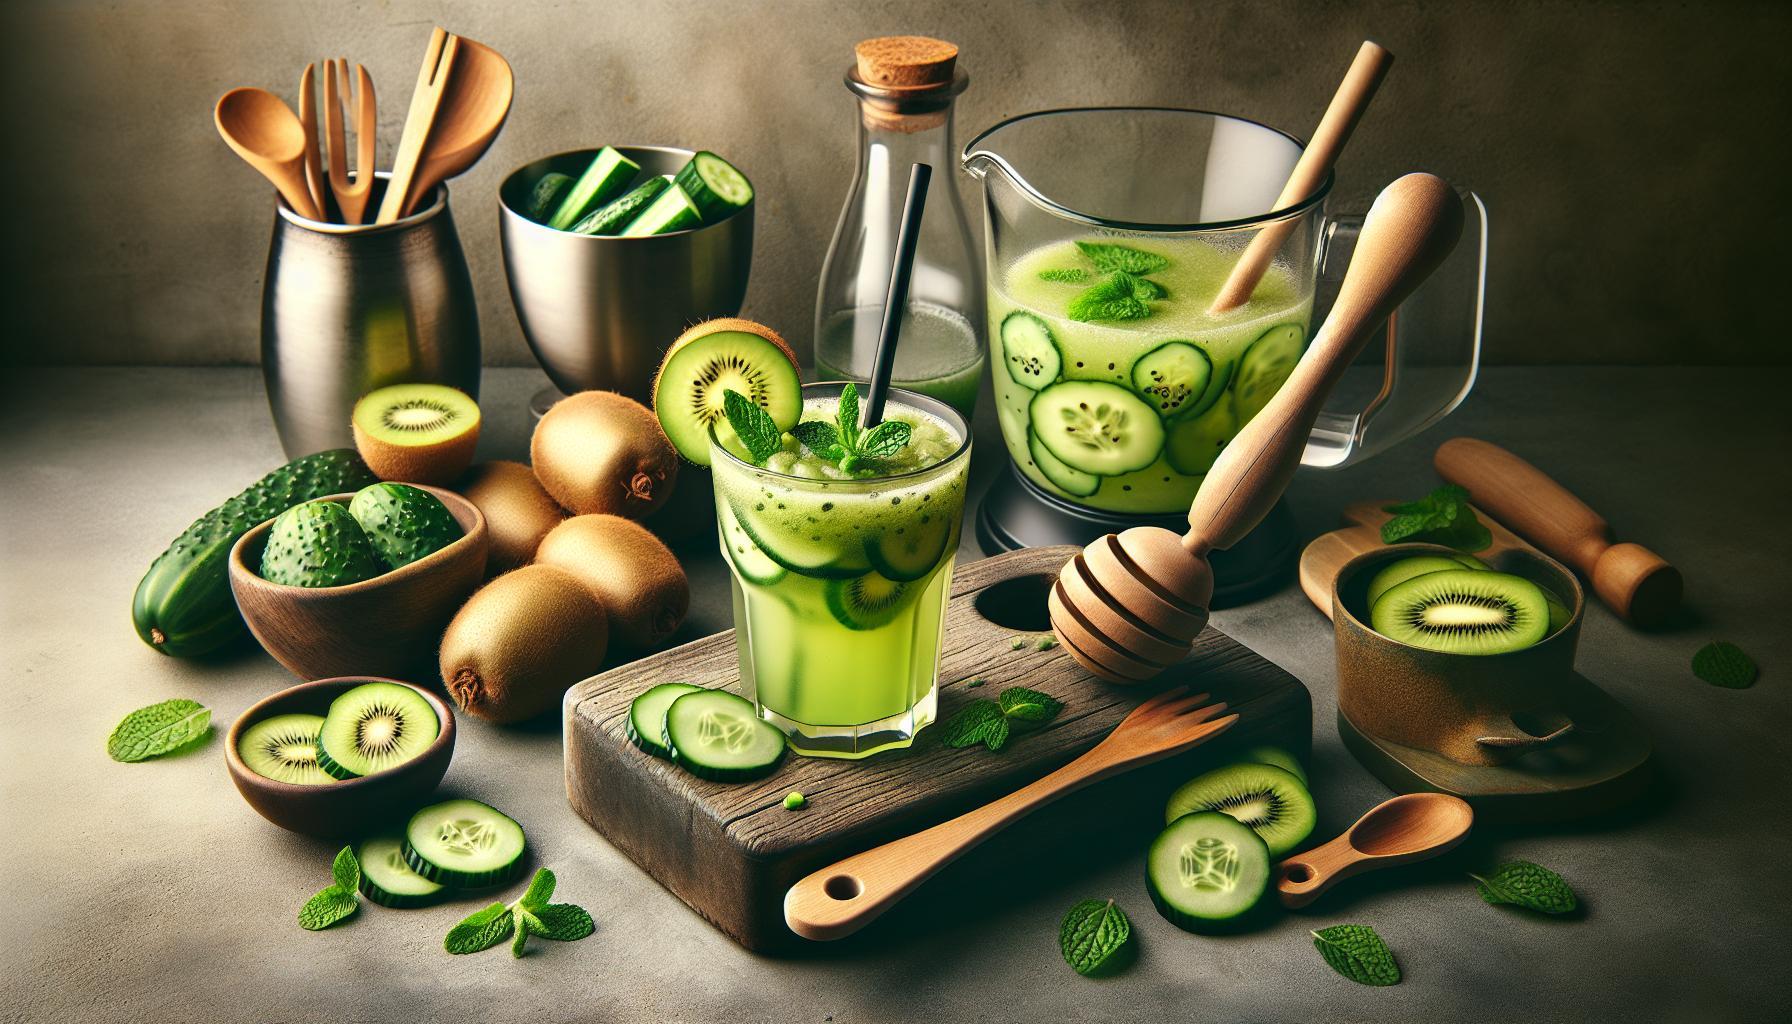 Refreshing Kiwi Cucumber Agua Fresca Recipe: The Perfect Summer Drink